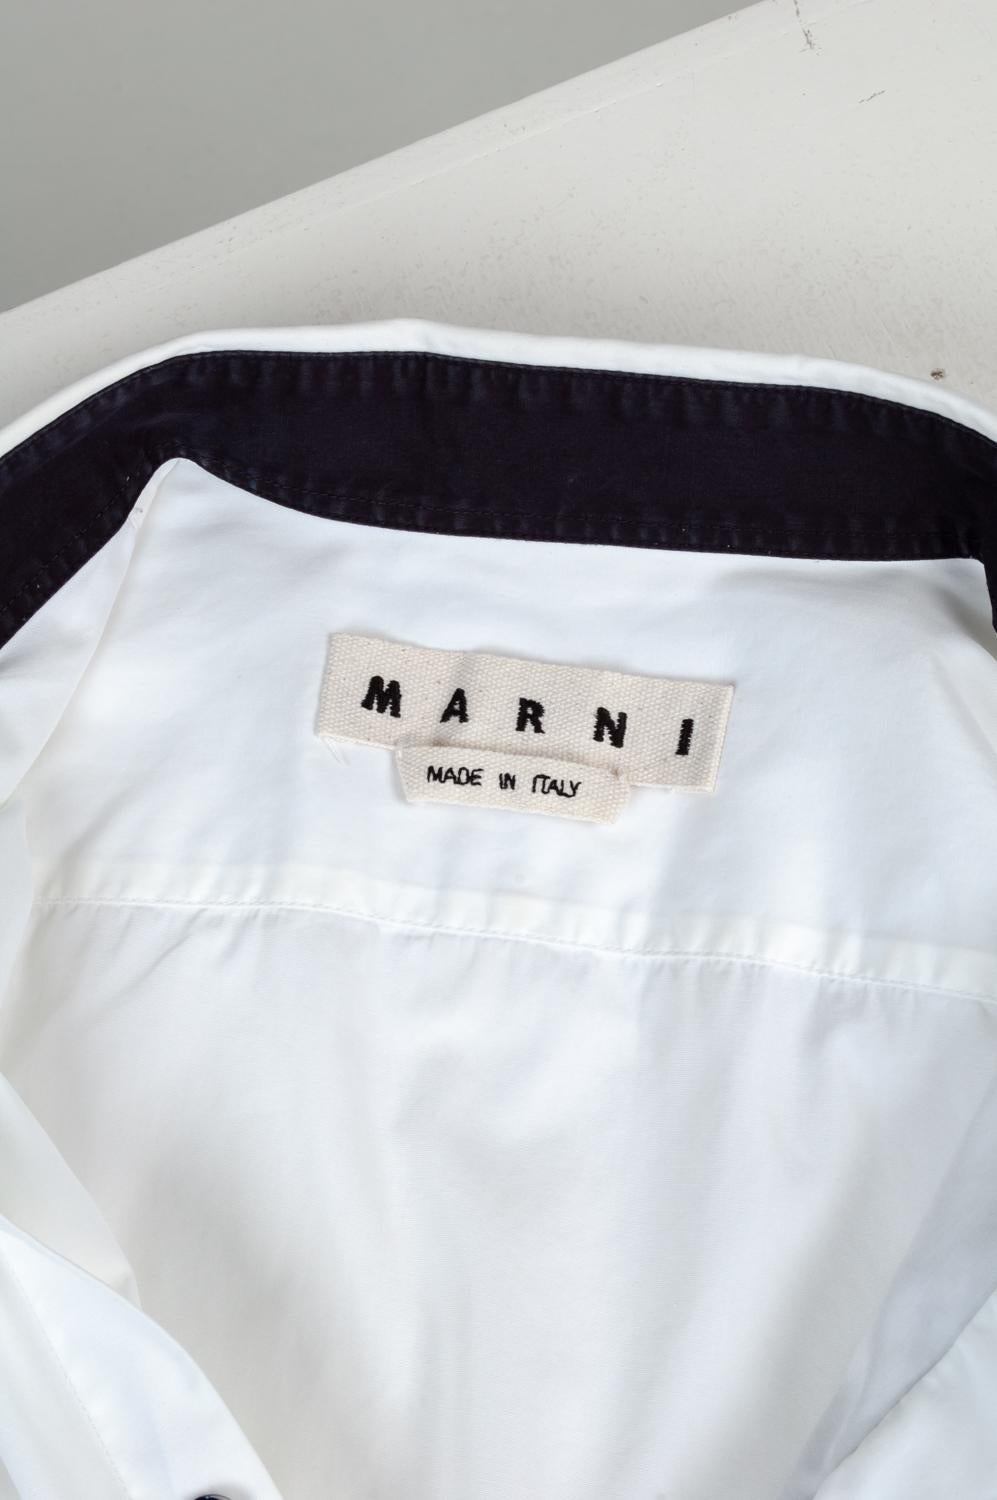 Marni Men Casual Shirt Size ITA 48 (Medium), S617 For Sale 1